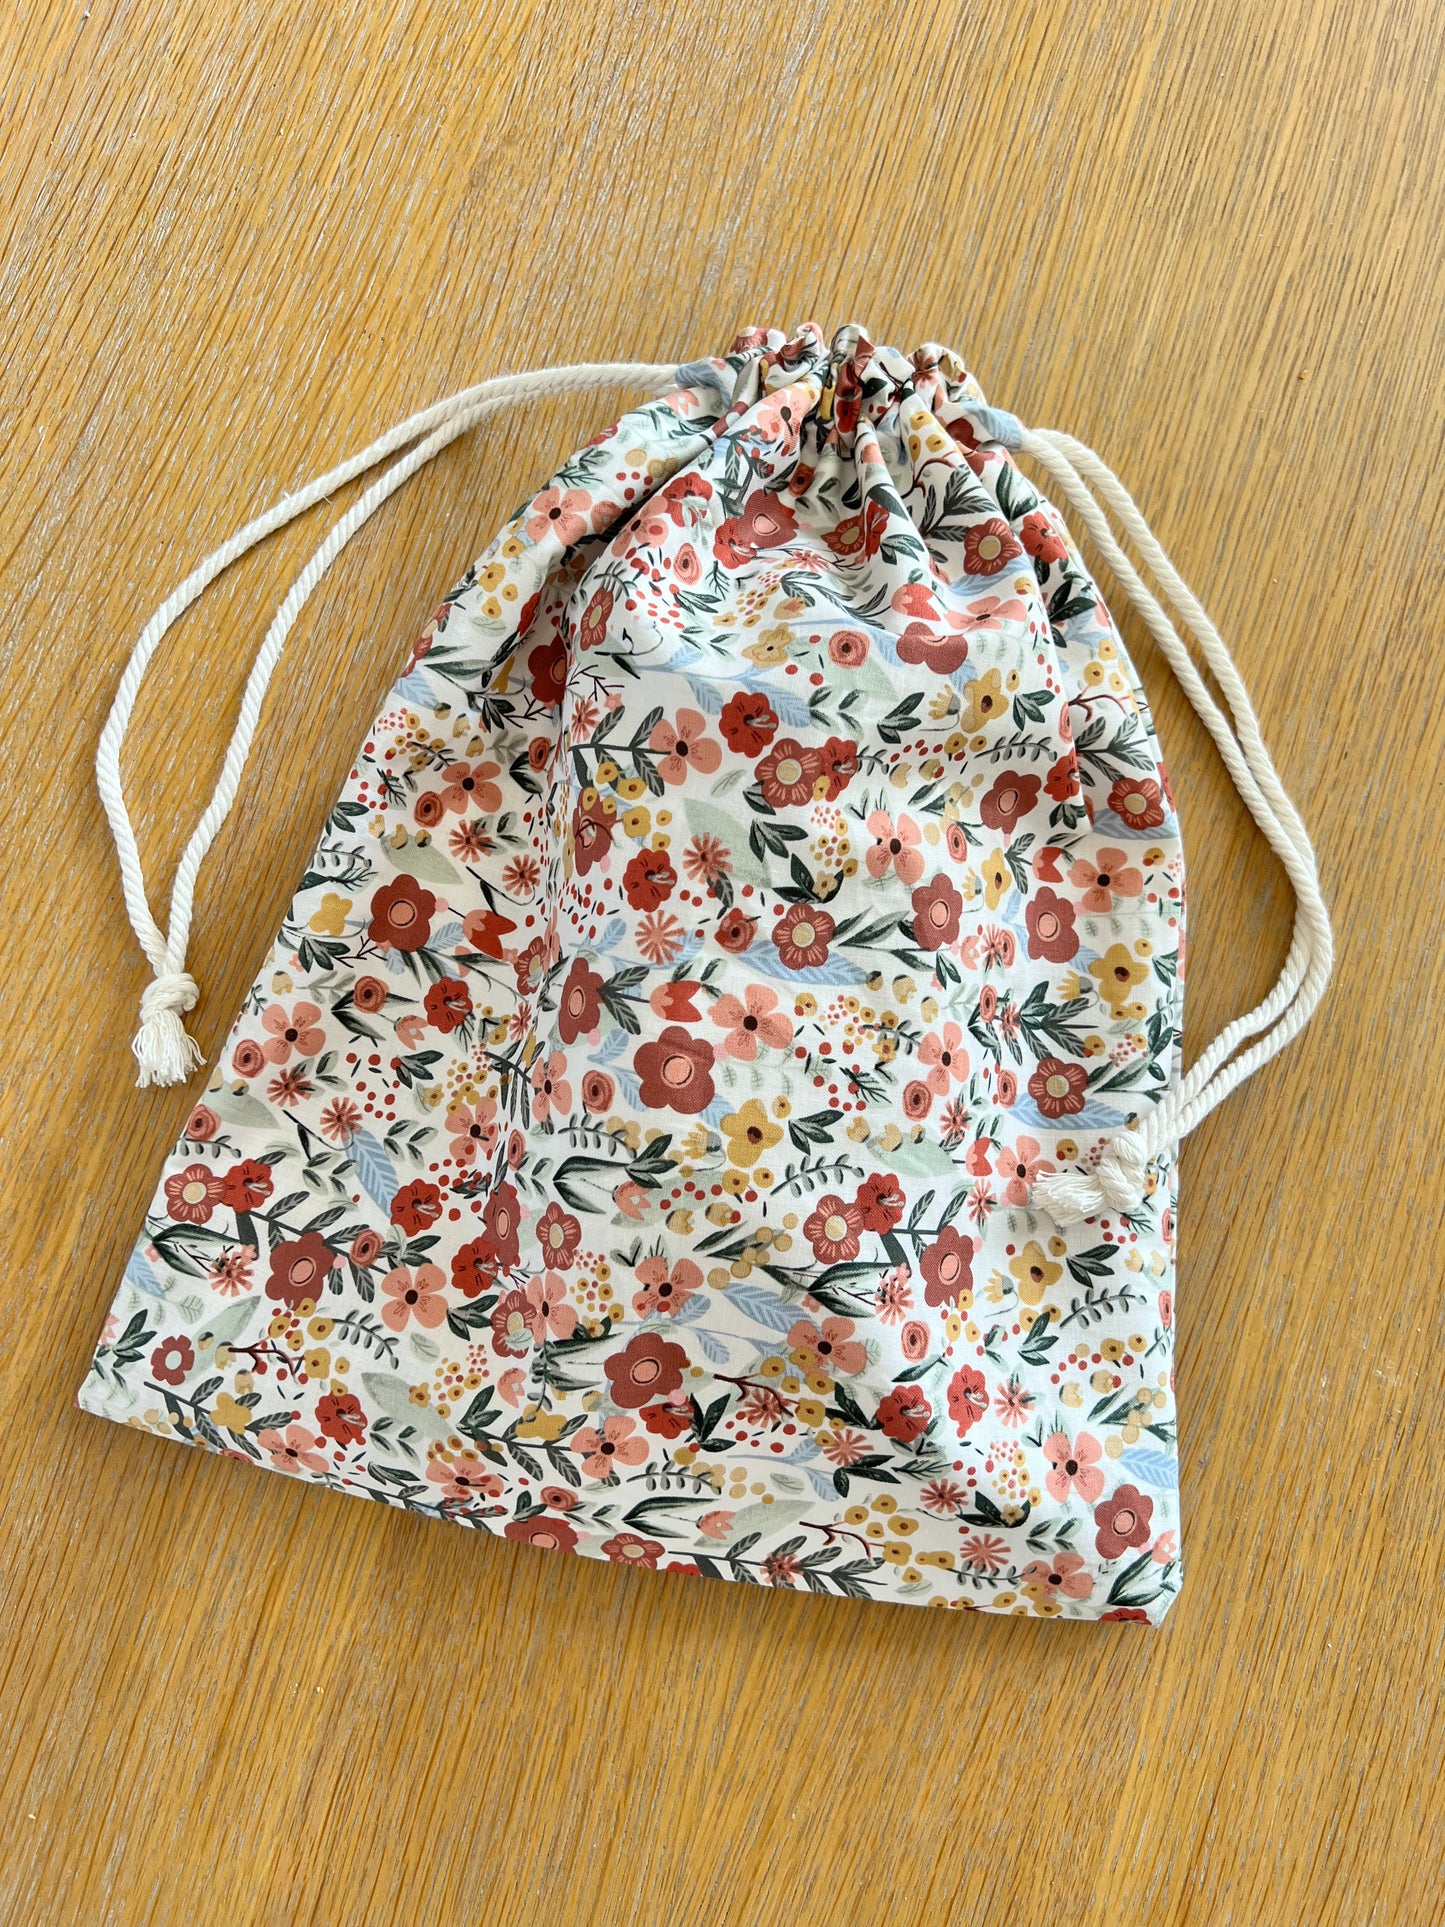 Wildflower Bread Bag